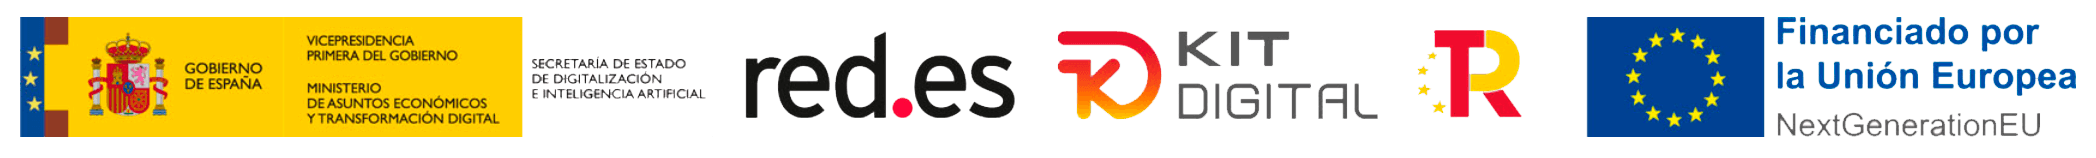 logo de KIT DIGITAL